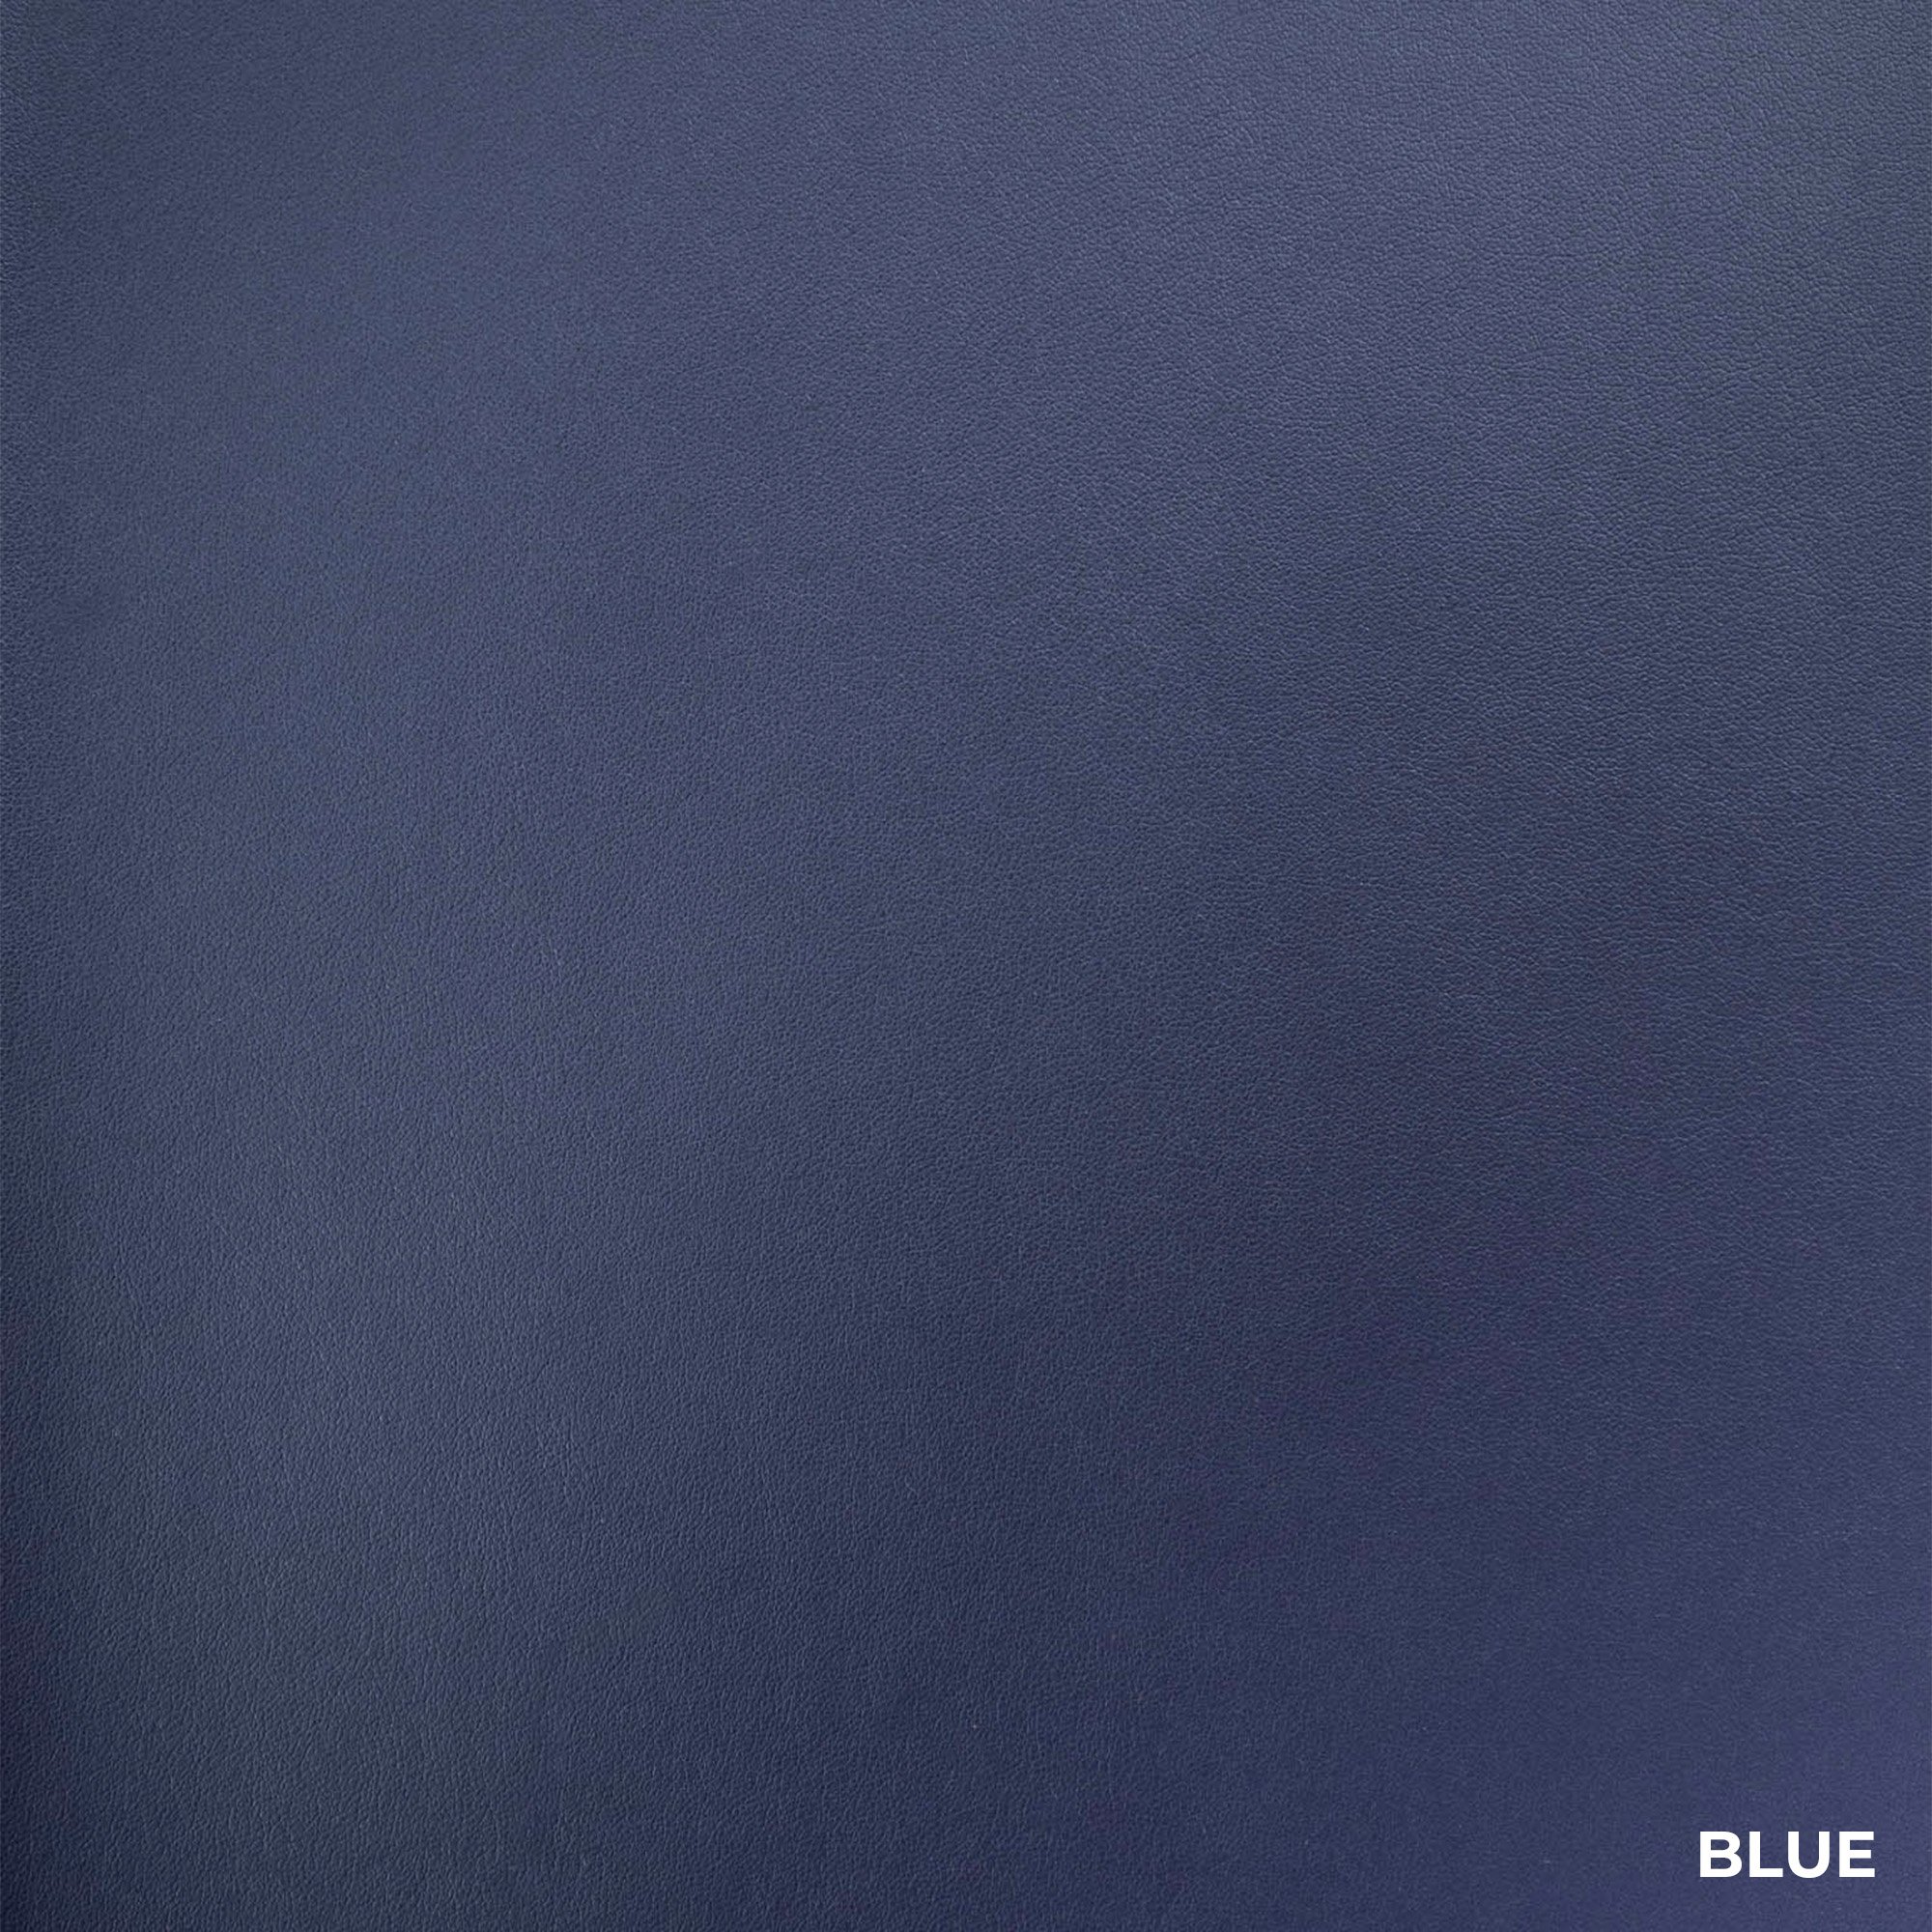 Blue Iridescent